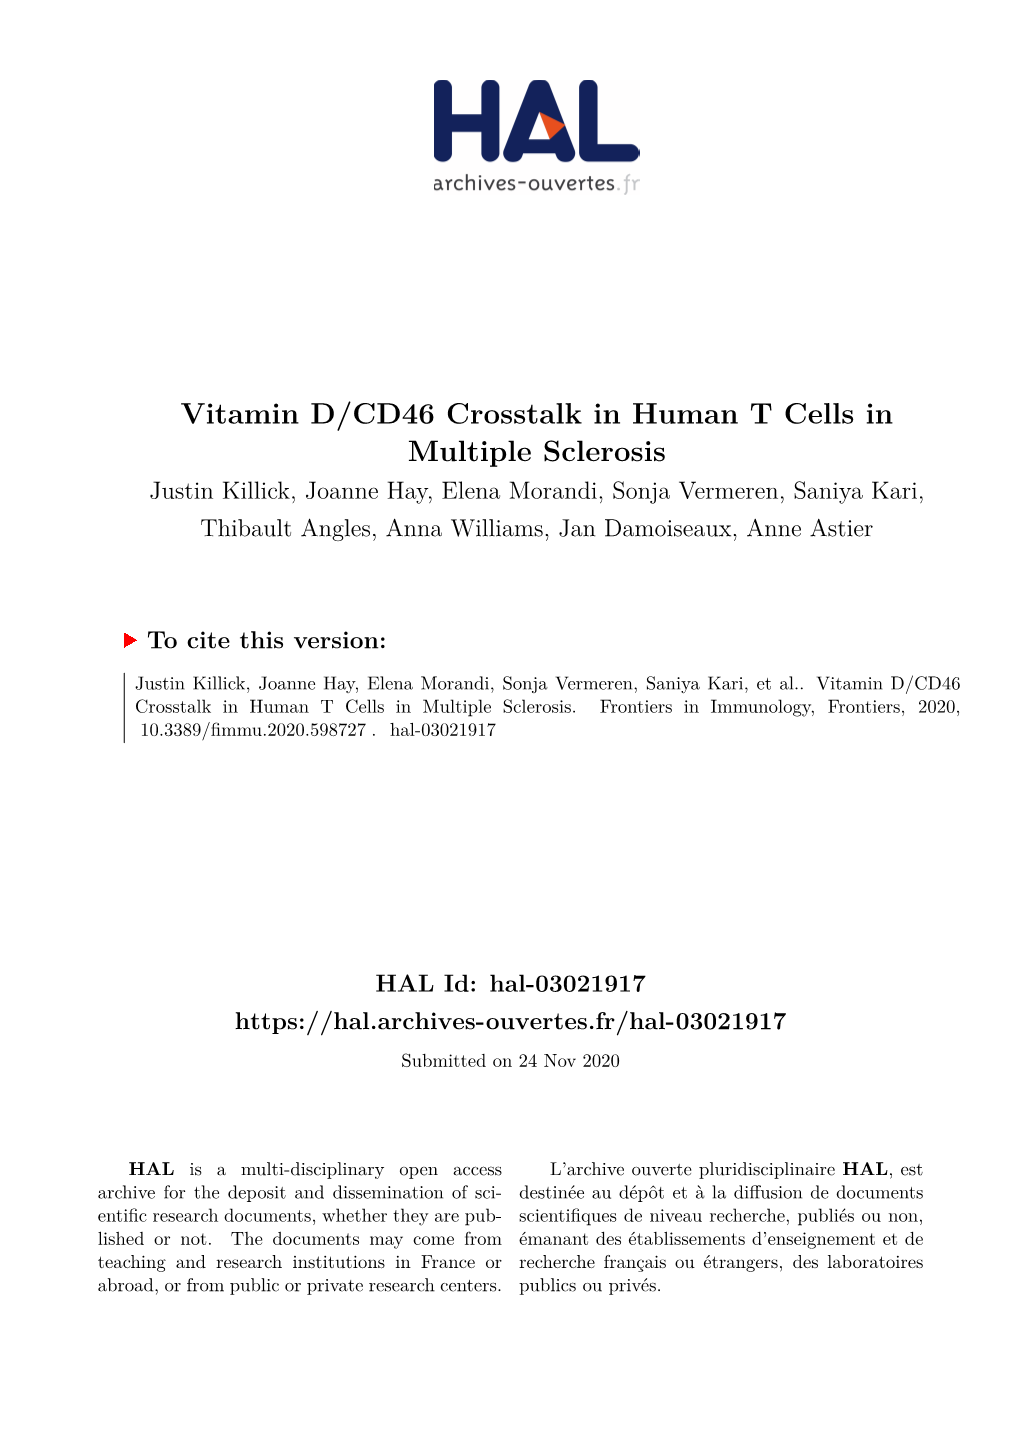 Vitamin D/CD46 Crosstalk in Human T Cells in Multiple Sclerosis